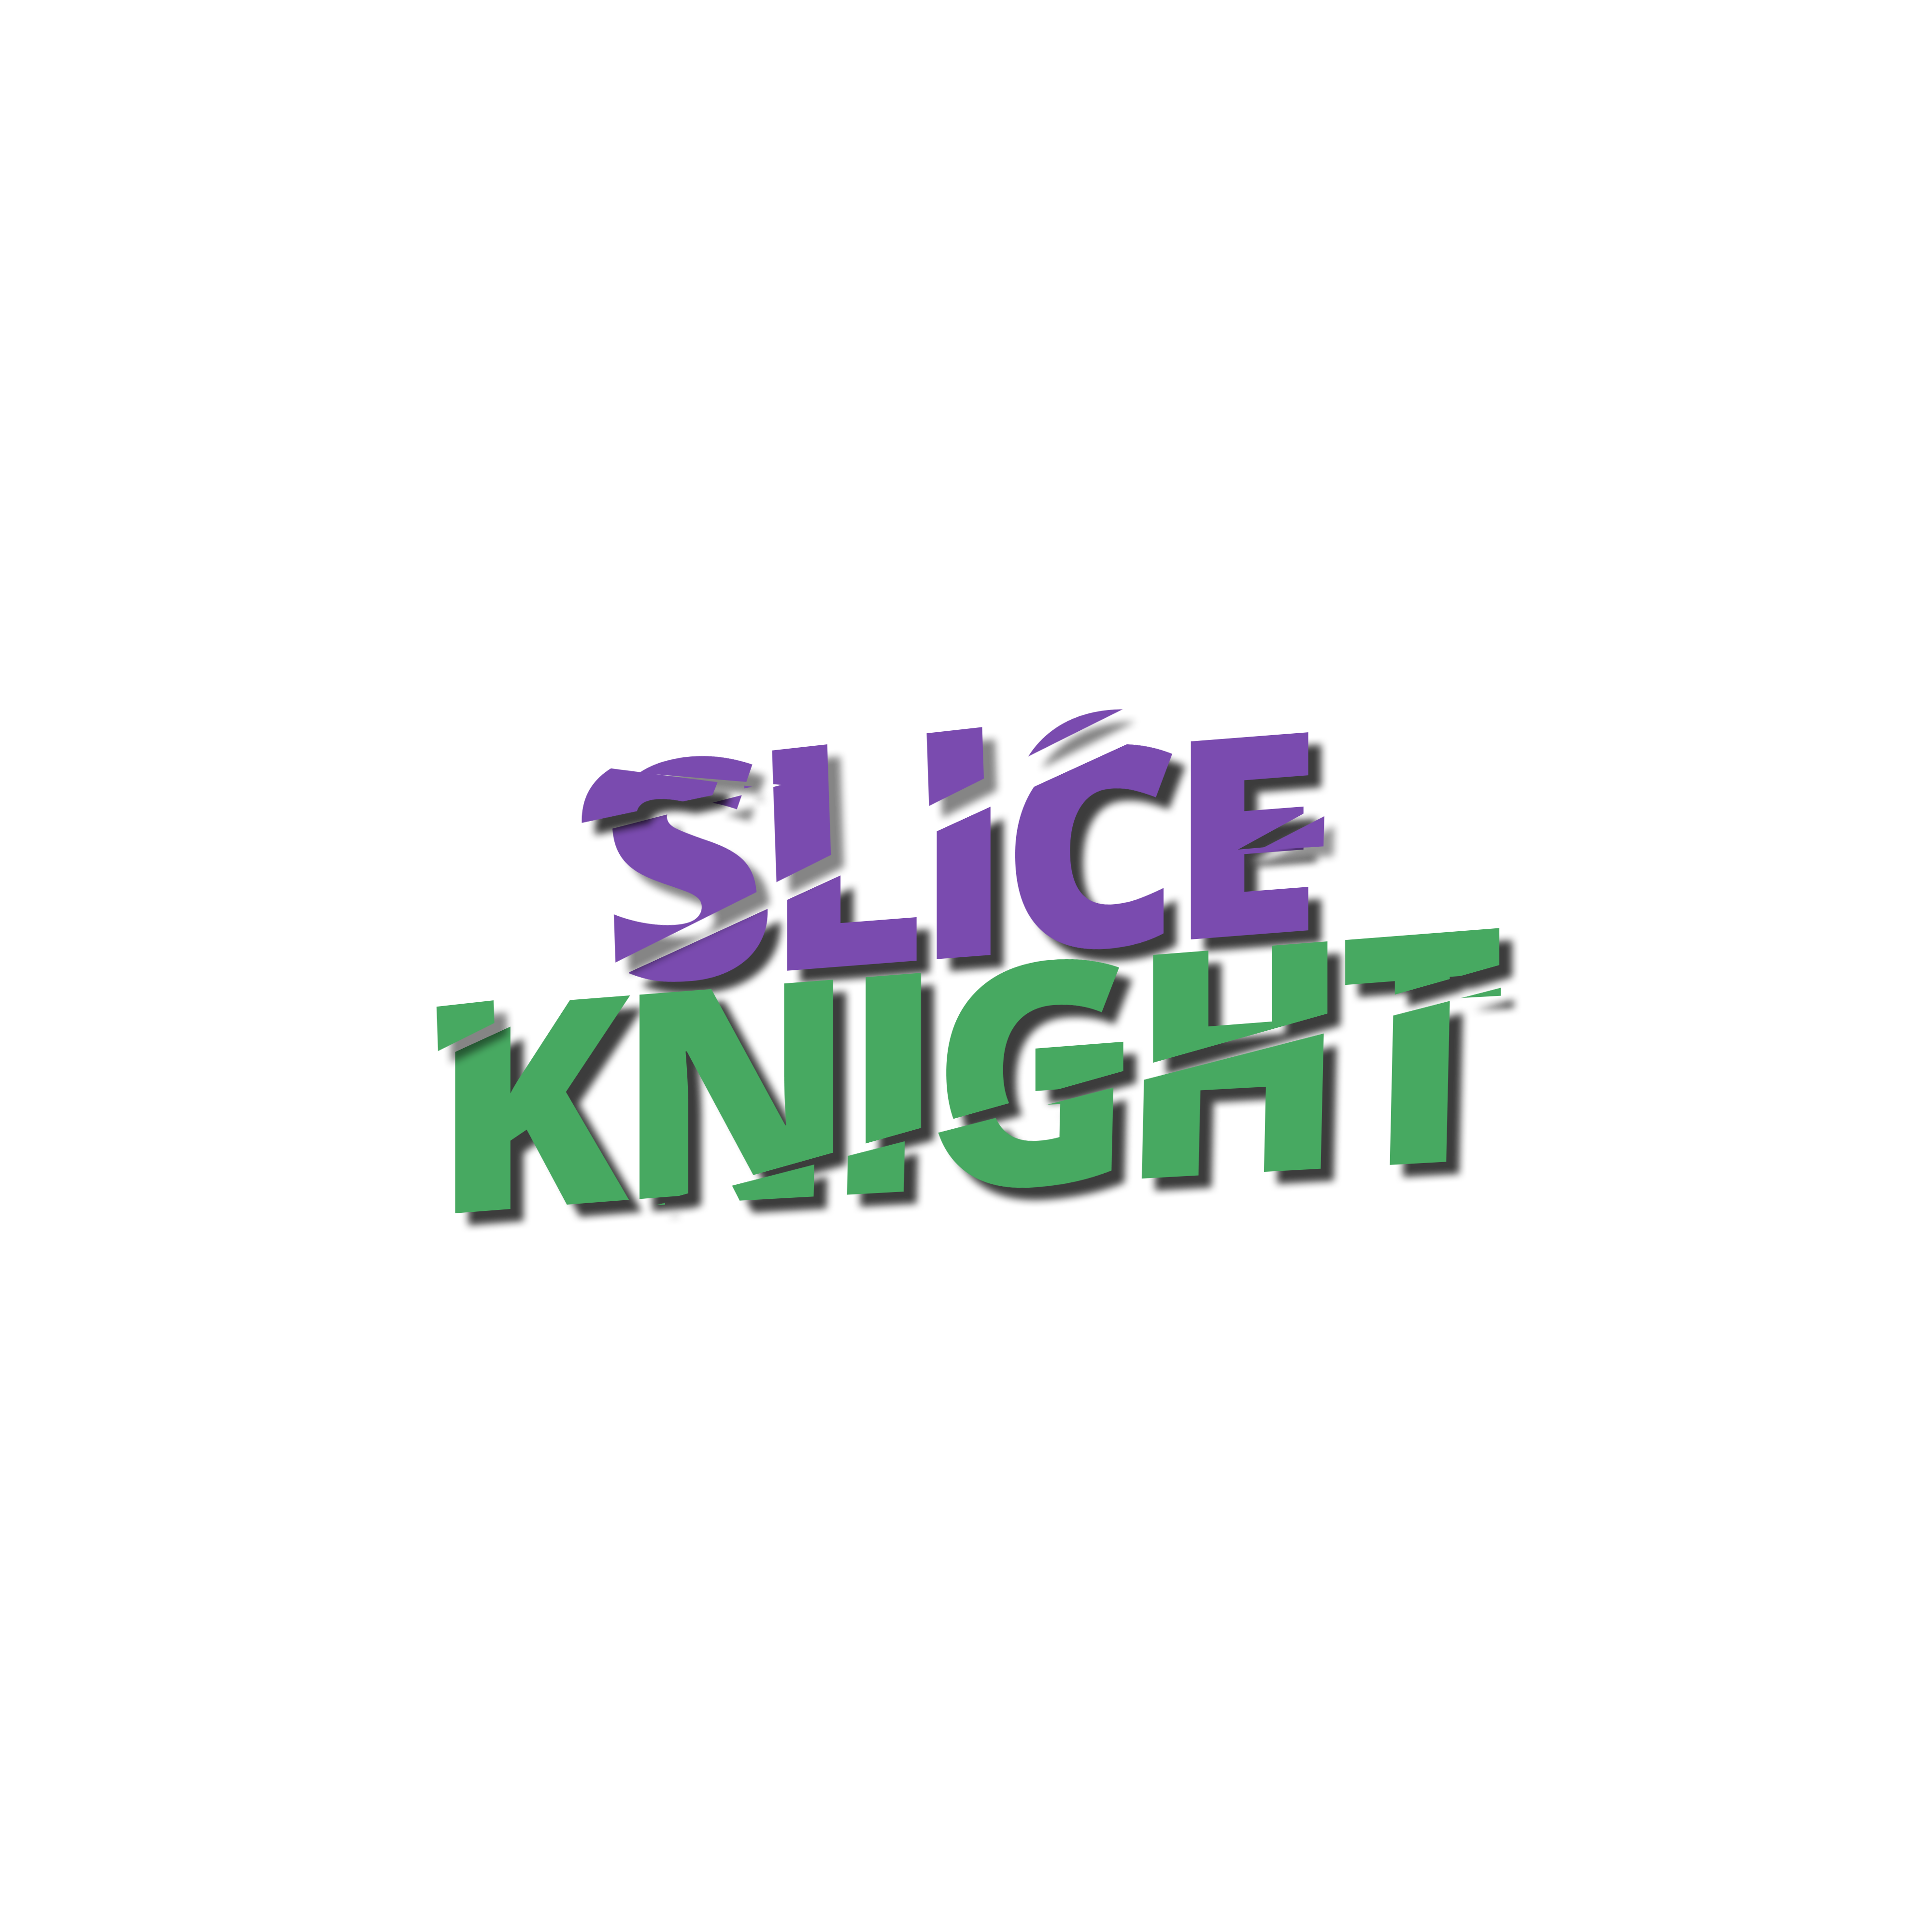 Slice Knight